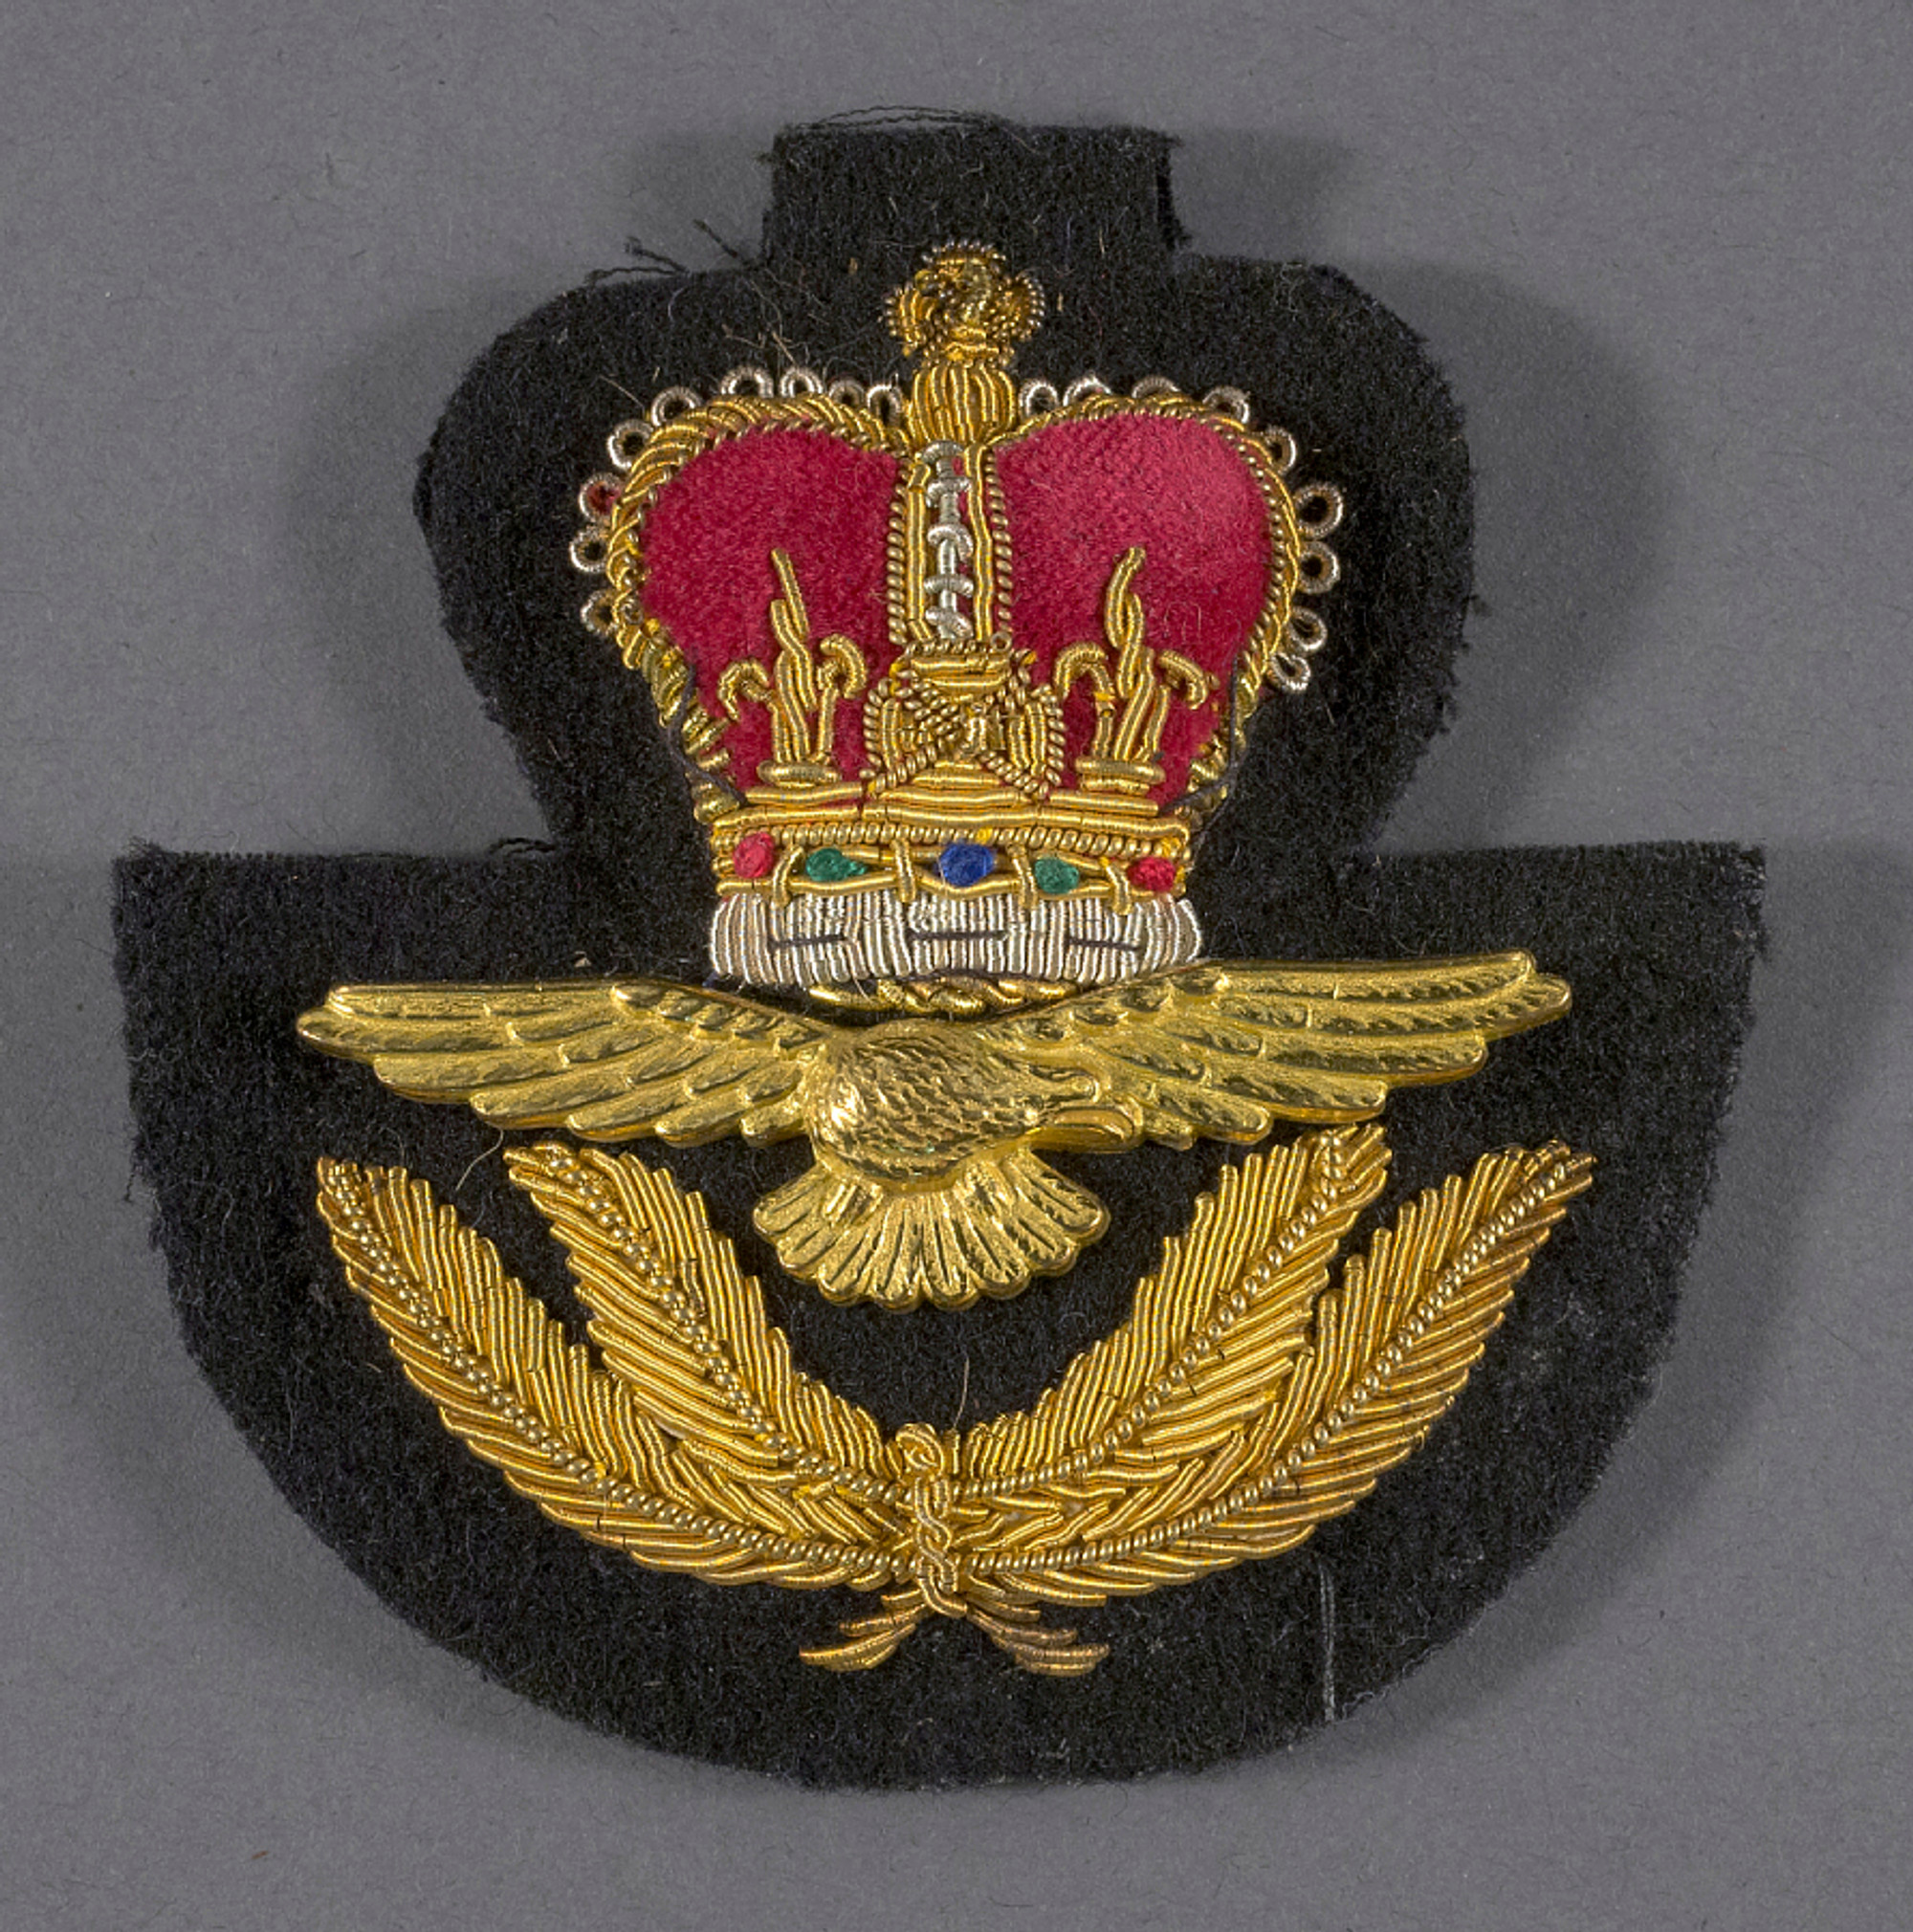 RCAF Bullion Cap Badge - Queen's Crown